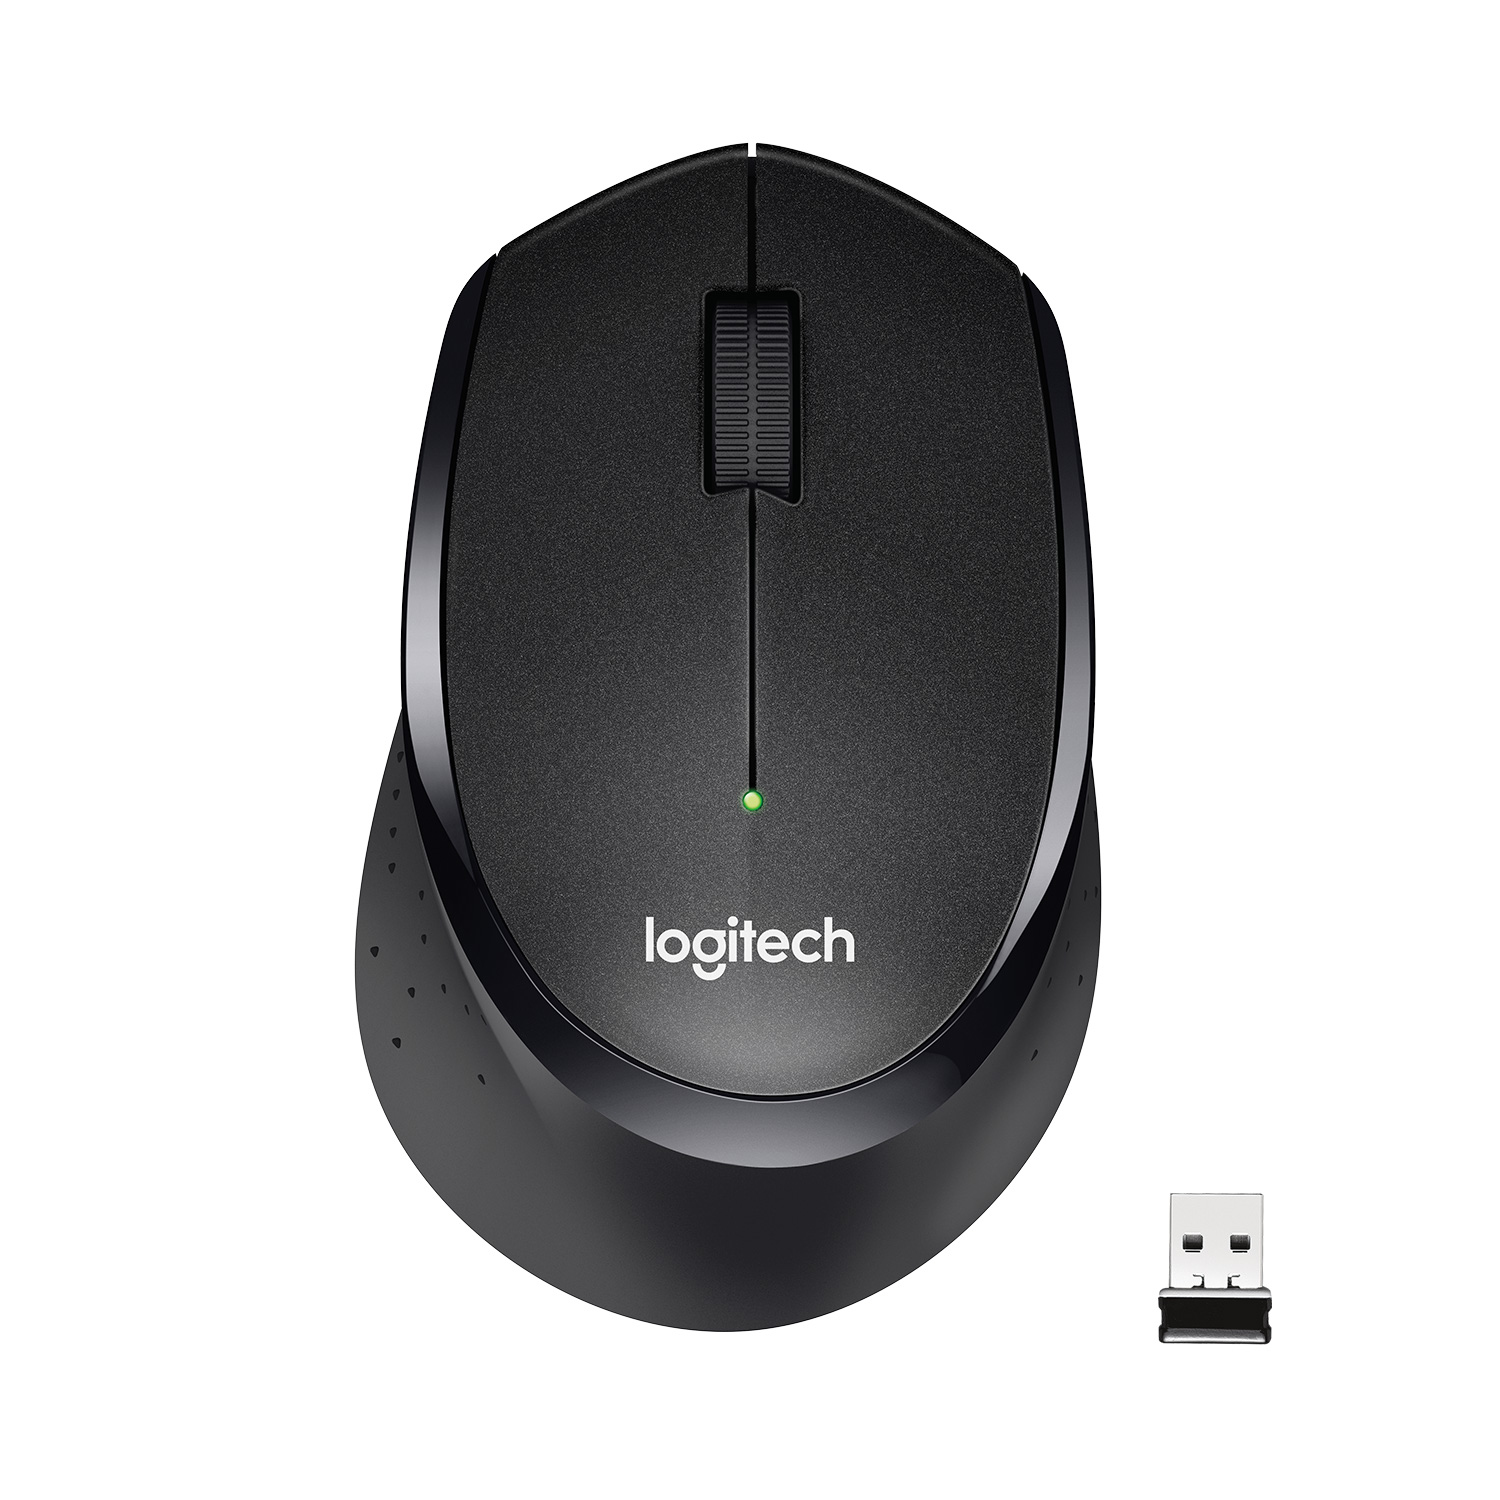 Logitech M330 SILENT PLUS - Maus - 3 Tasten - kabellos - 2.4 GHz - kabelloser Empfänger (USB)